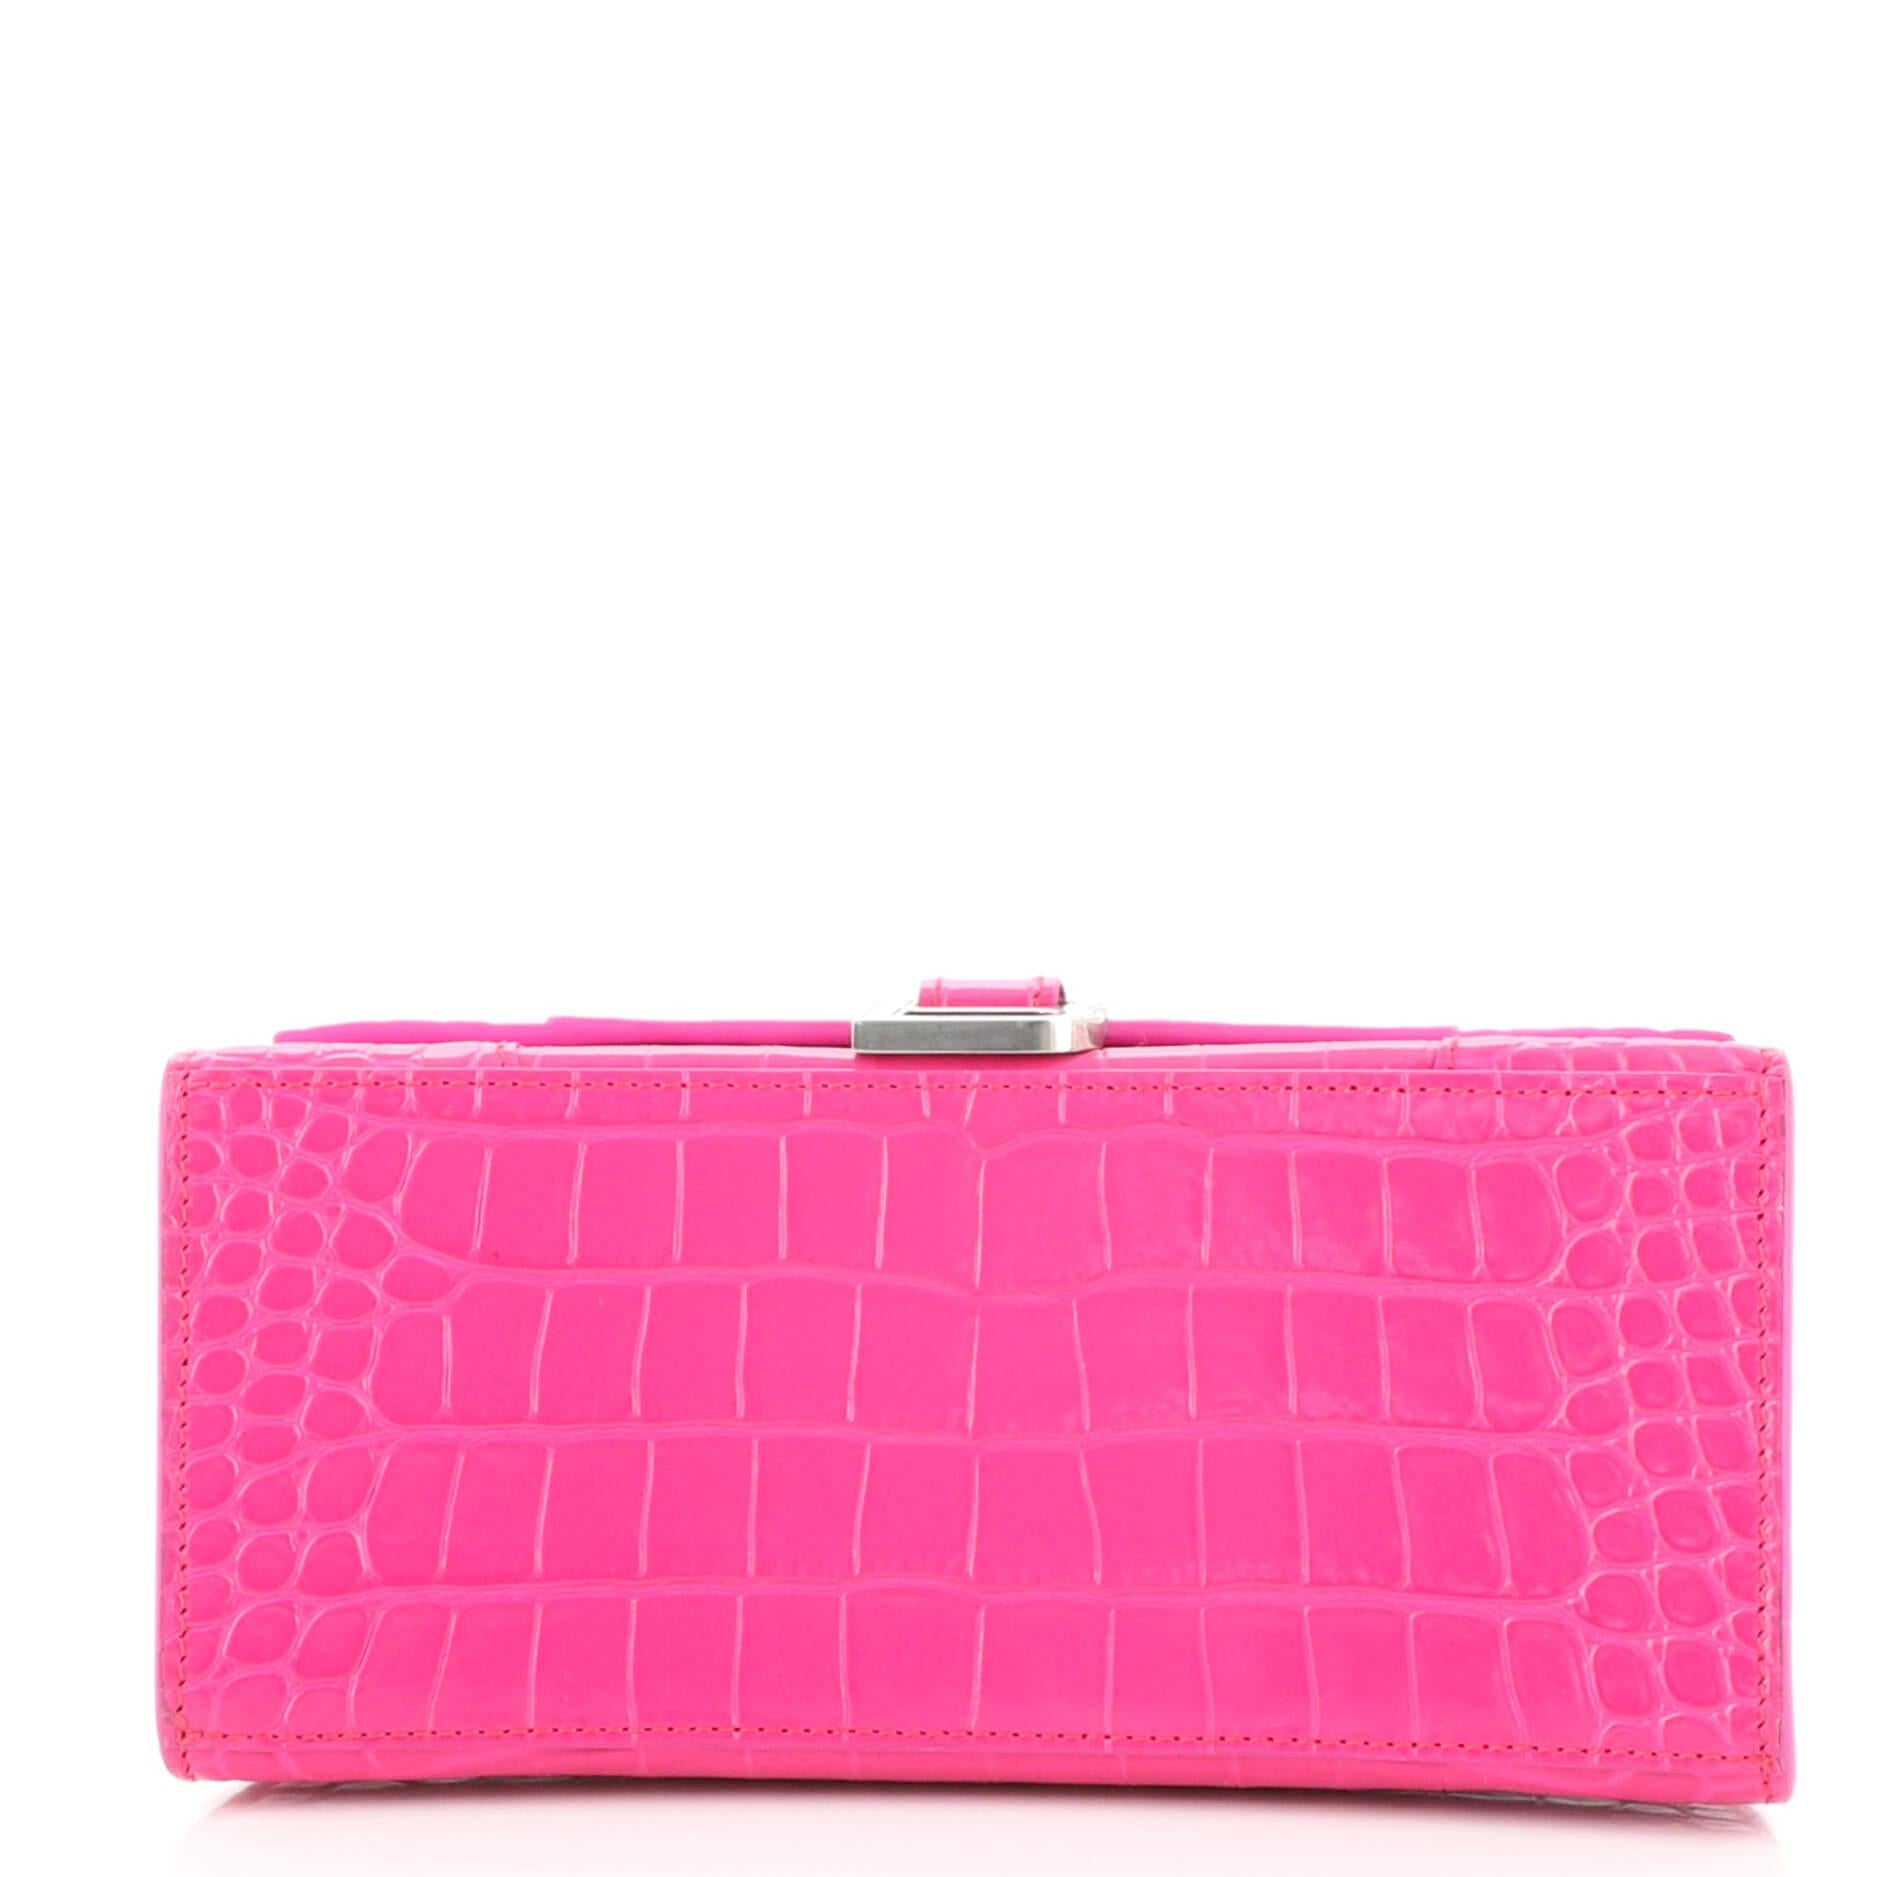 Pink Balenciaga Hourglass Top Handle Bag Crocodile Embossed Leather Small